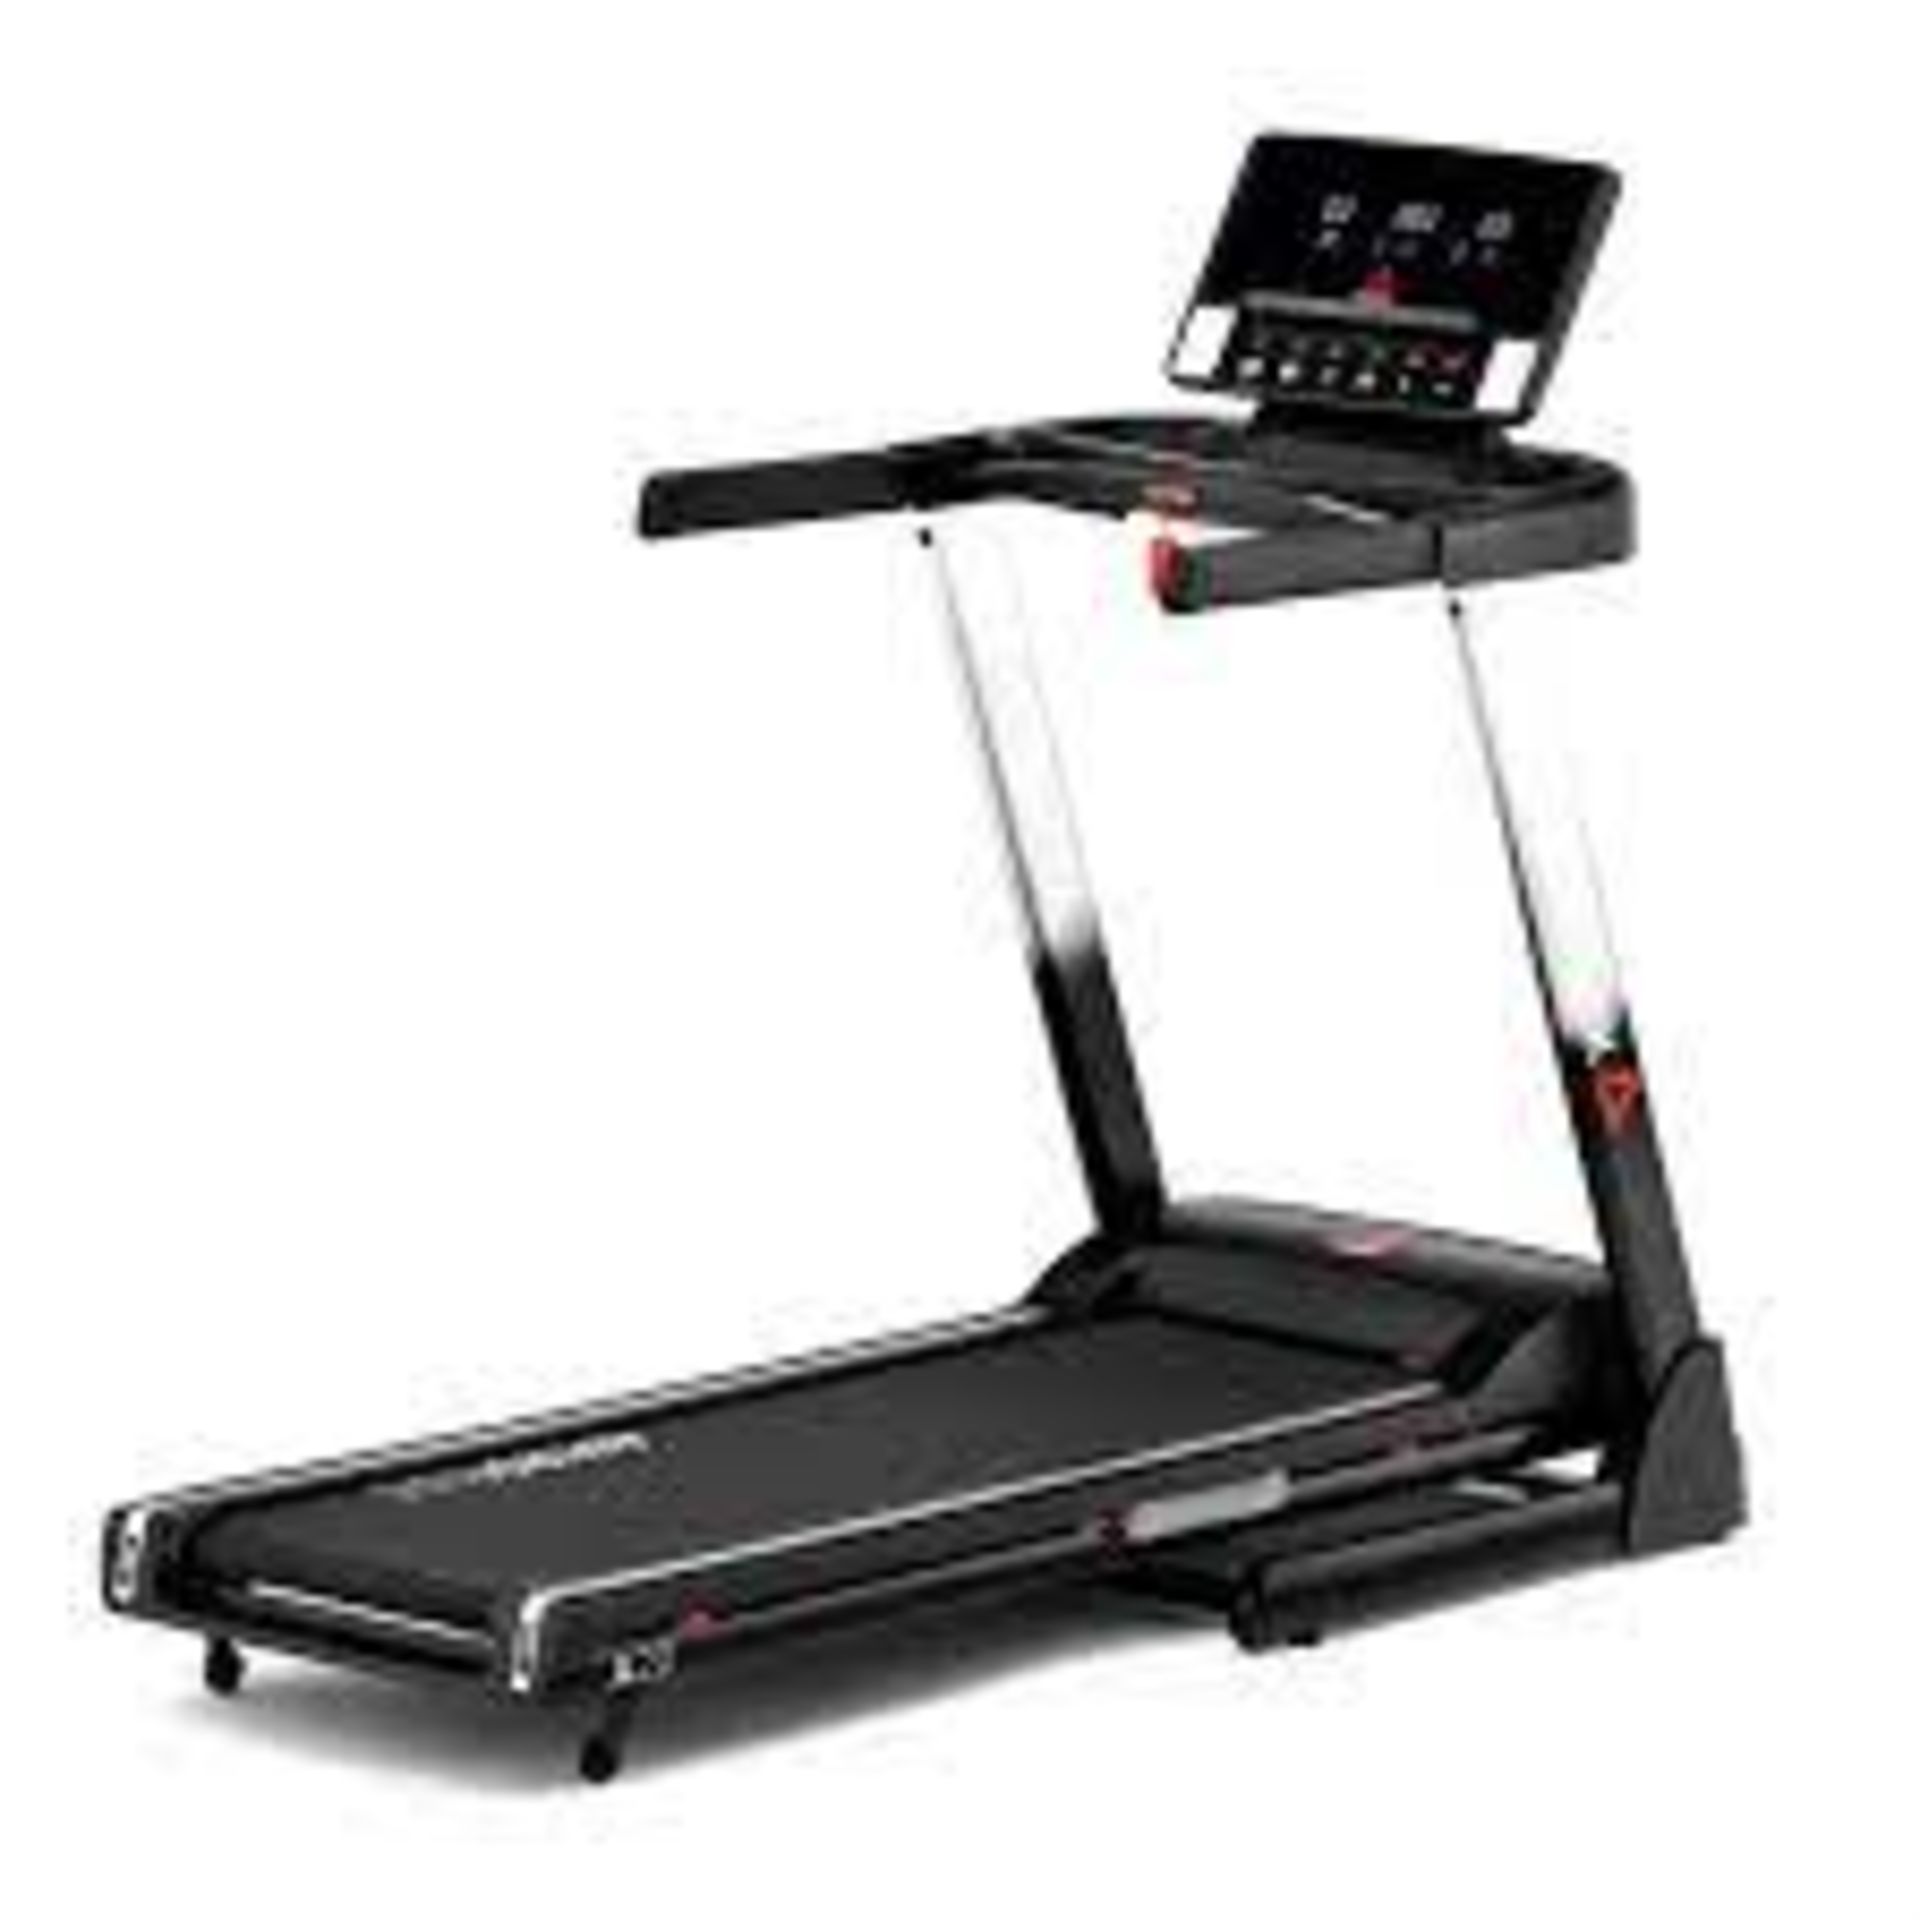 Reebok Astroride A2.0 Treadmill. RRP £800. The Reebok Astroride A2.0 Treadmill features Astroride